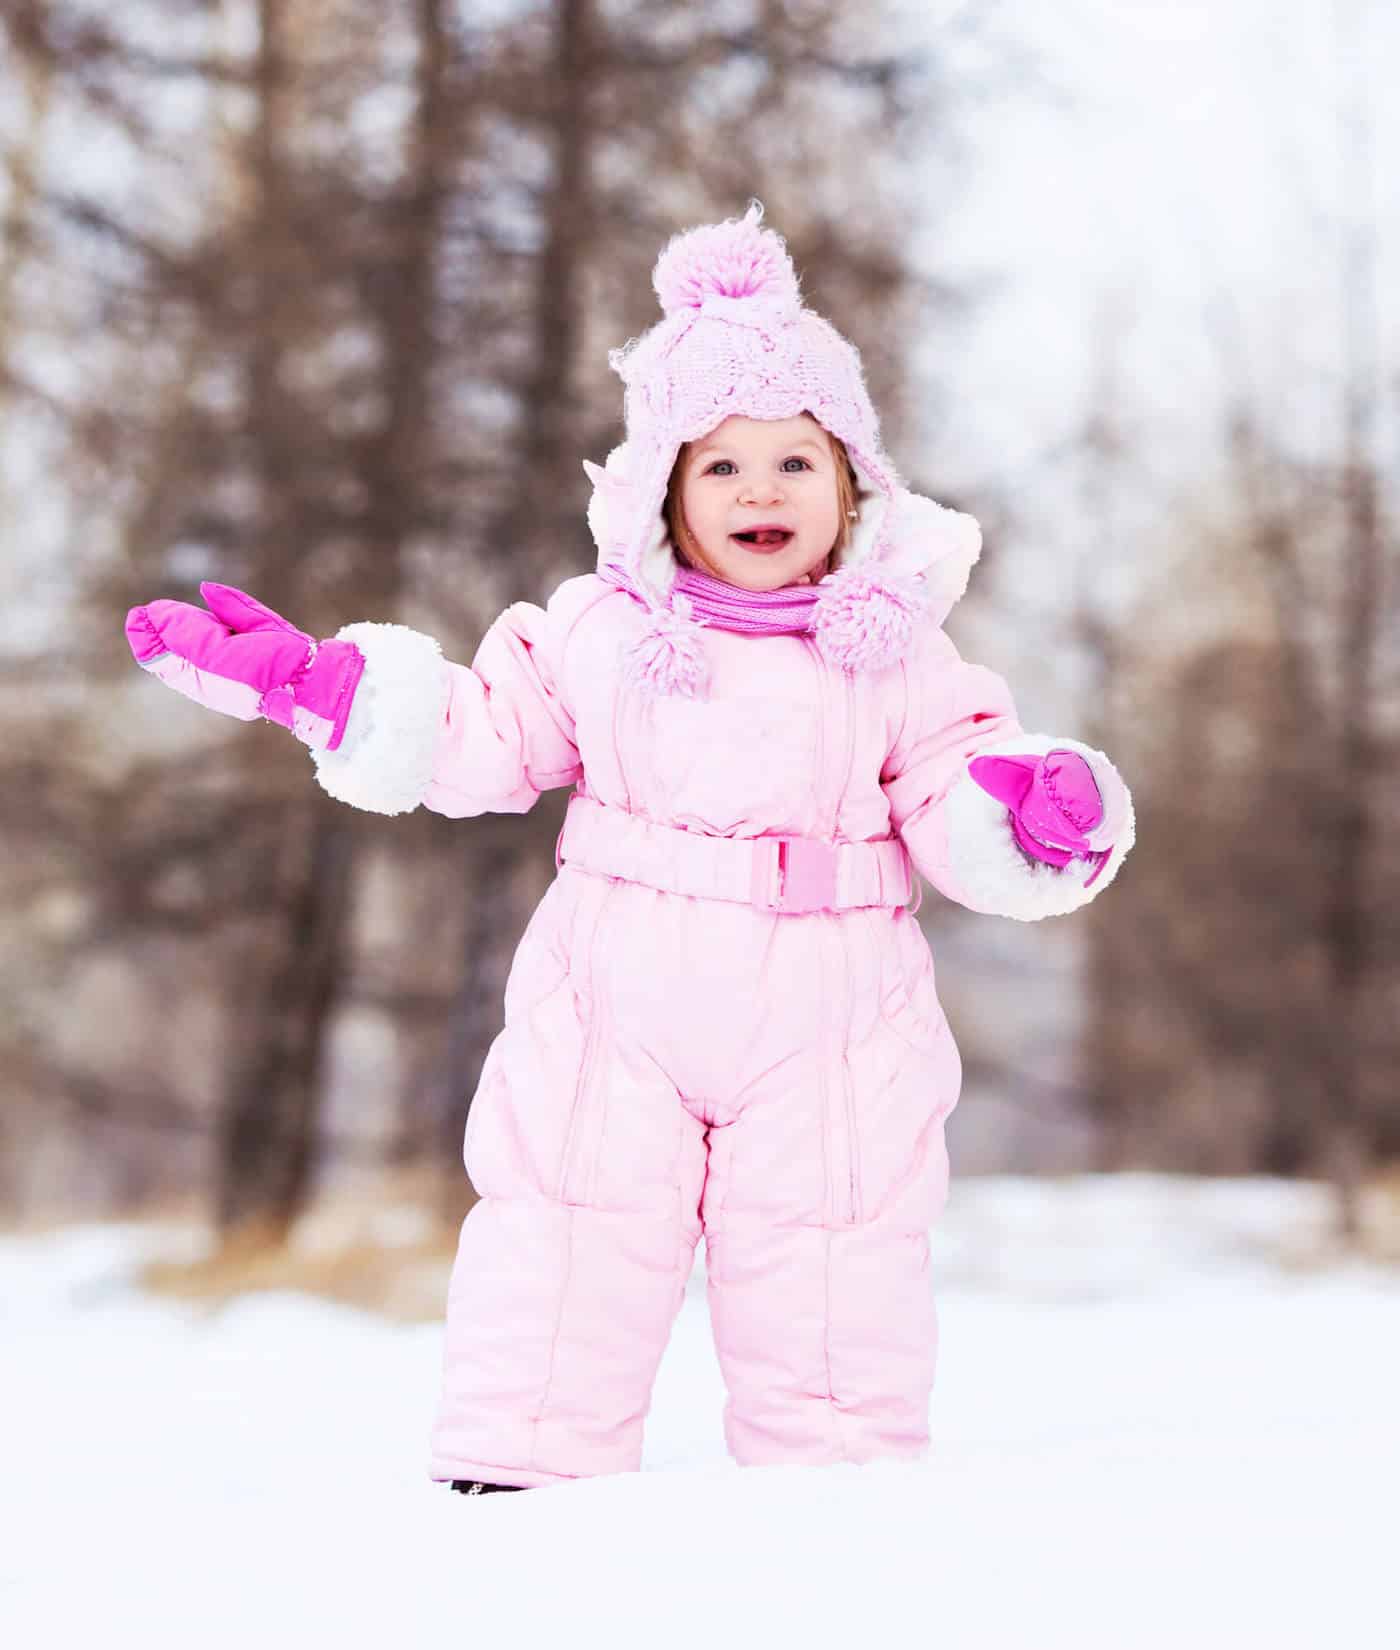 little girl in snow winter environment